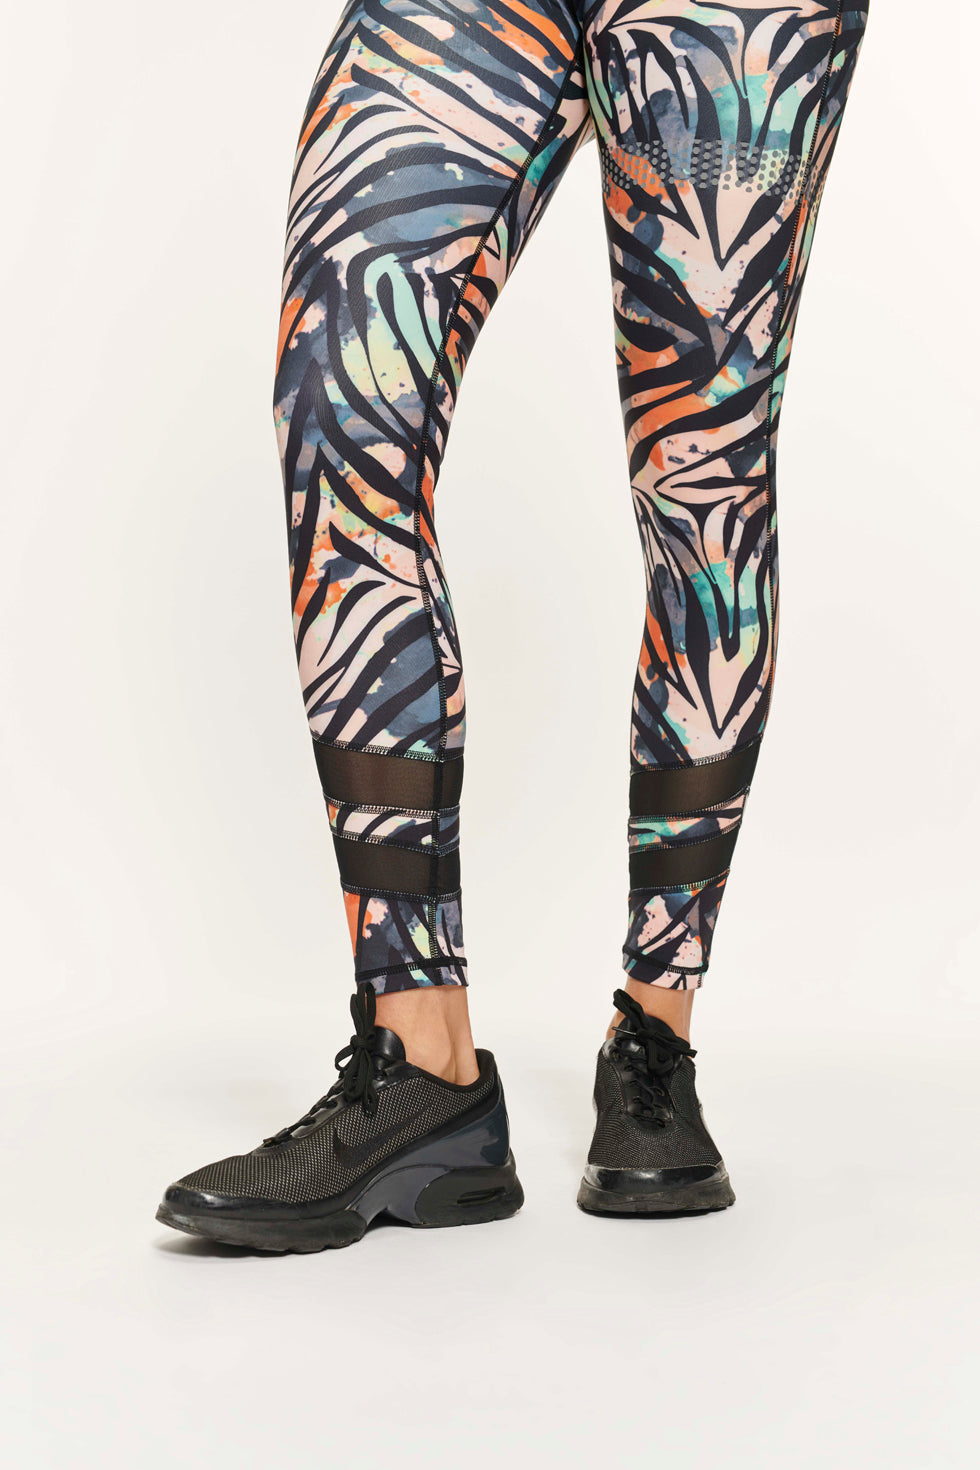 Active Panther - Multicolor - Mandy Zebra Mesh Legging